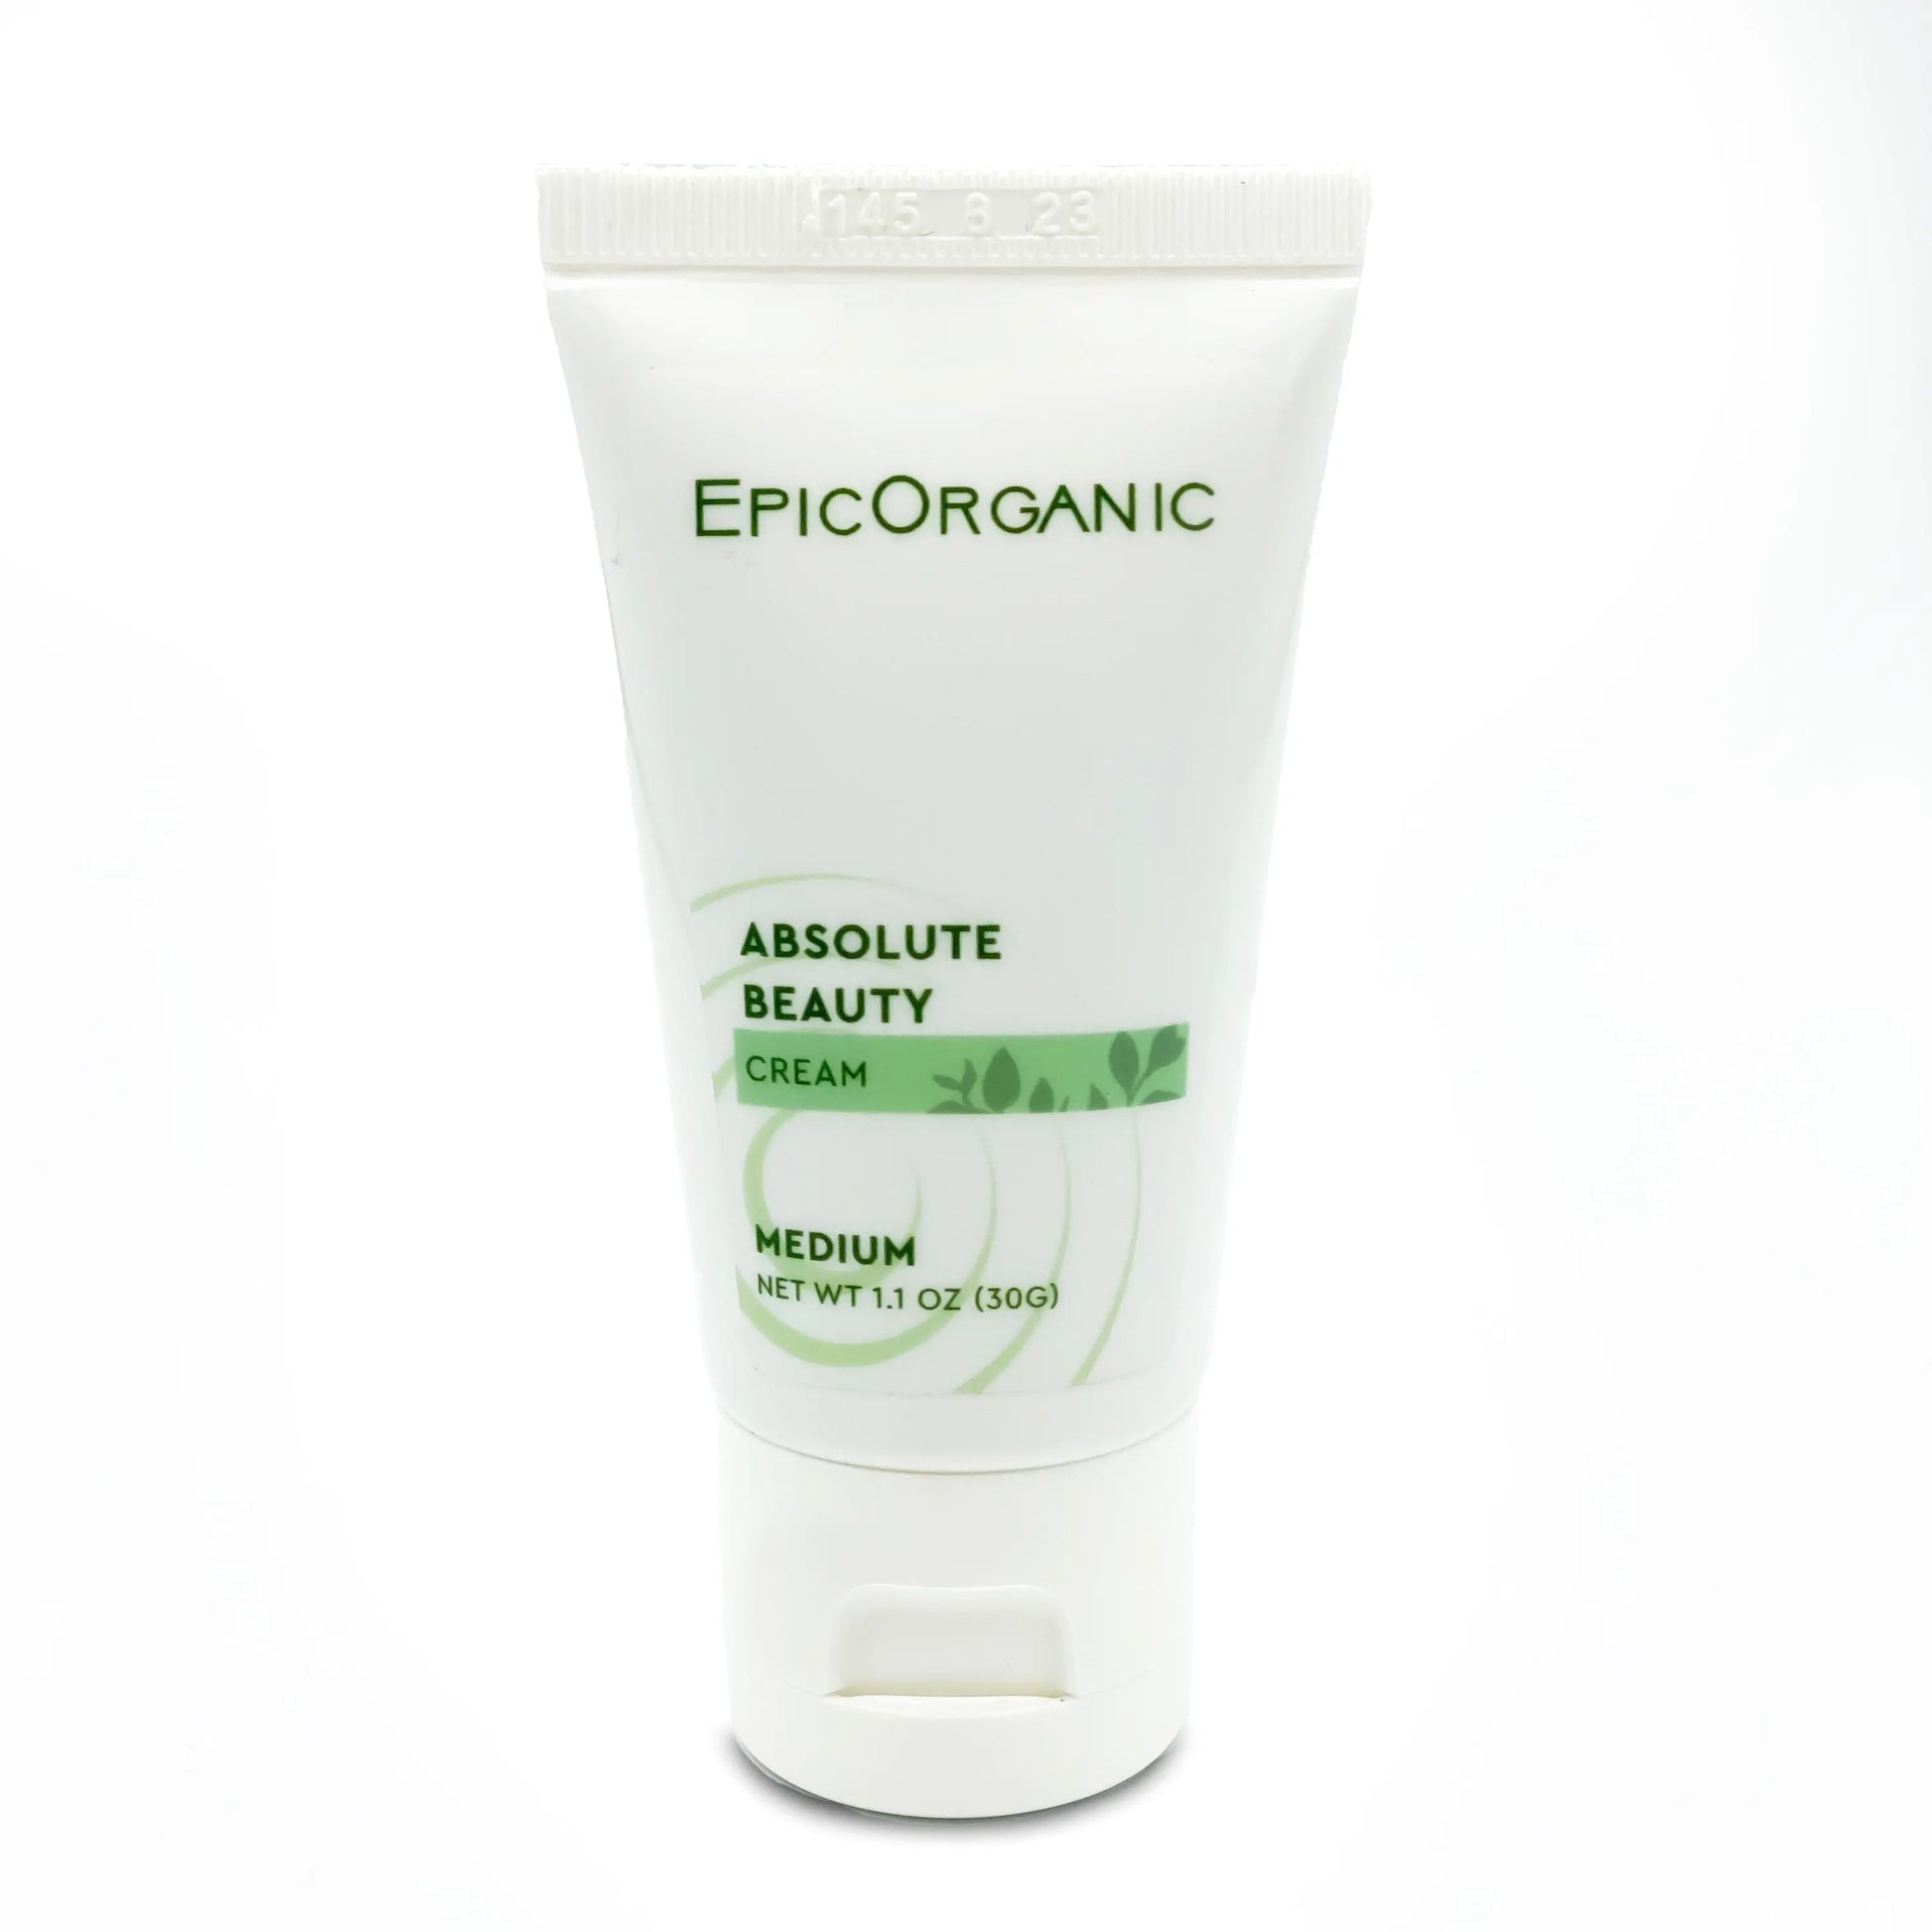 Epic Organic Absolute Beauty Cream Medium (1.1 oz) Epic Organic